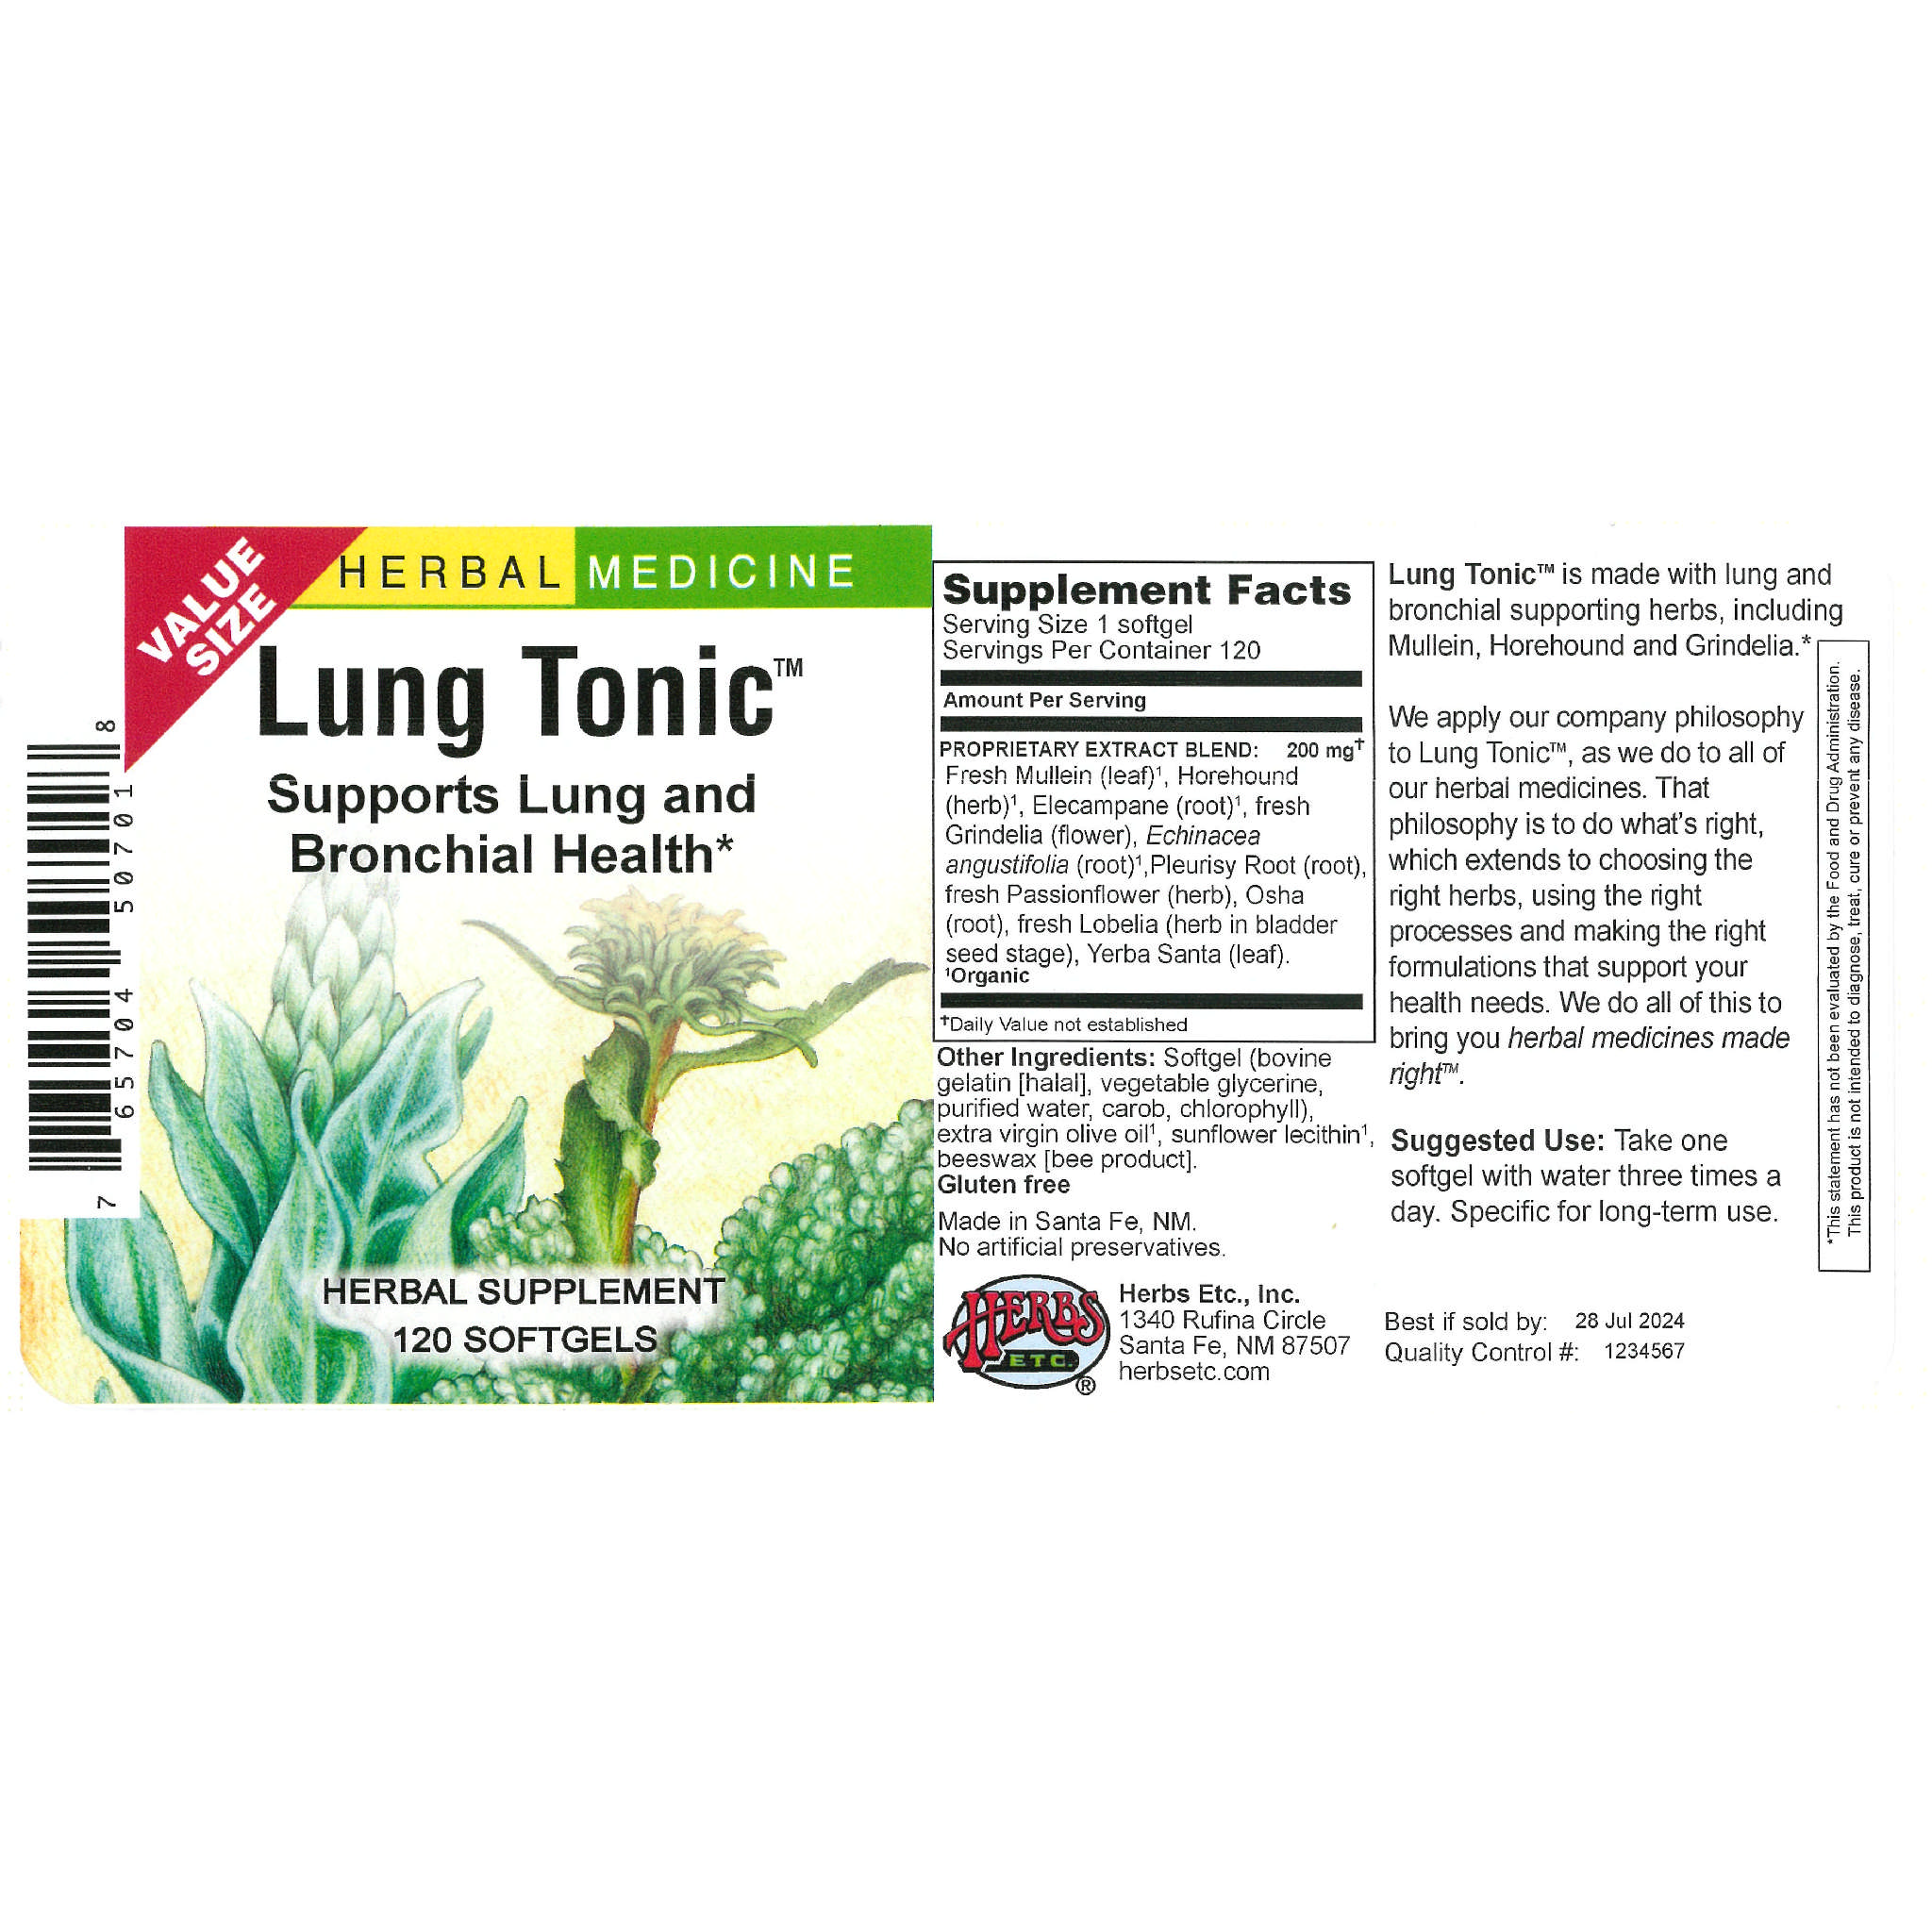 Herbs Etc - Lung Tonic softgel